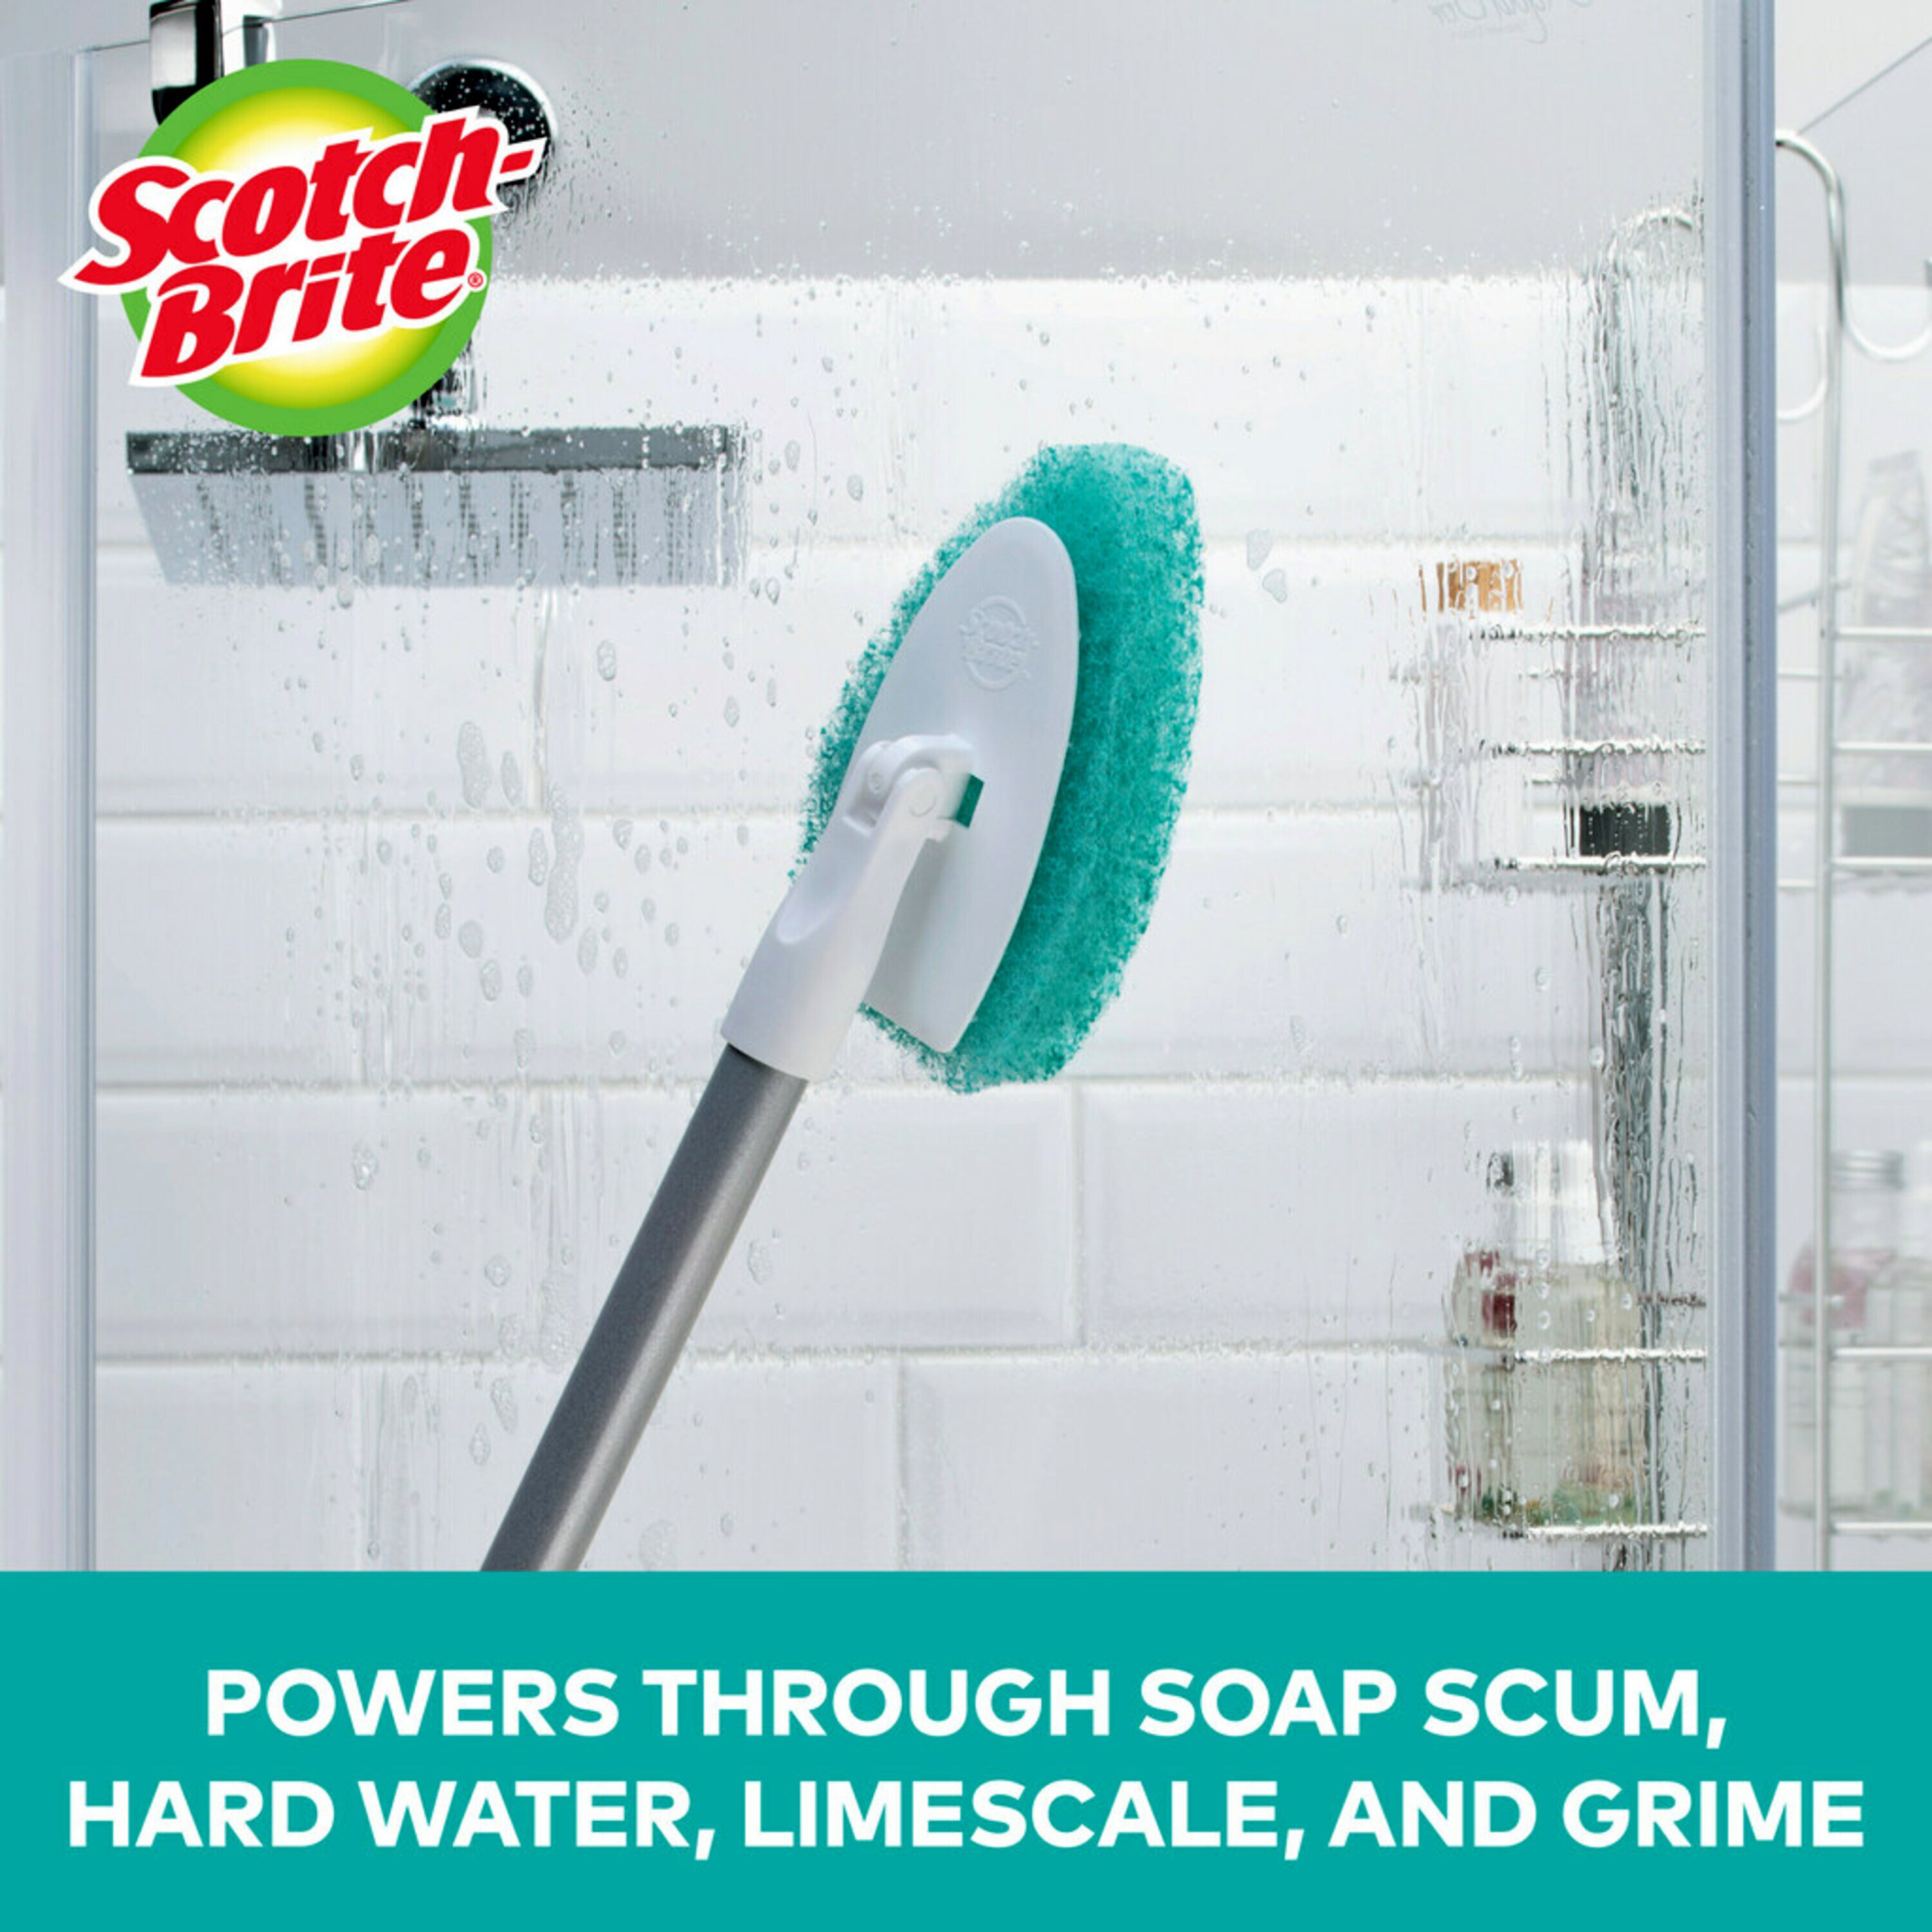 Scotch-Brite Scrub & Drop Toilet Cleaning System - Shop Brushes at H-E-B